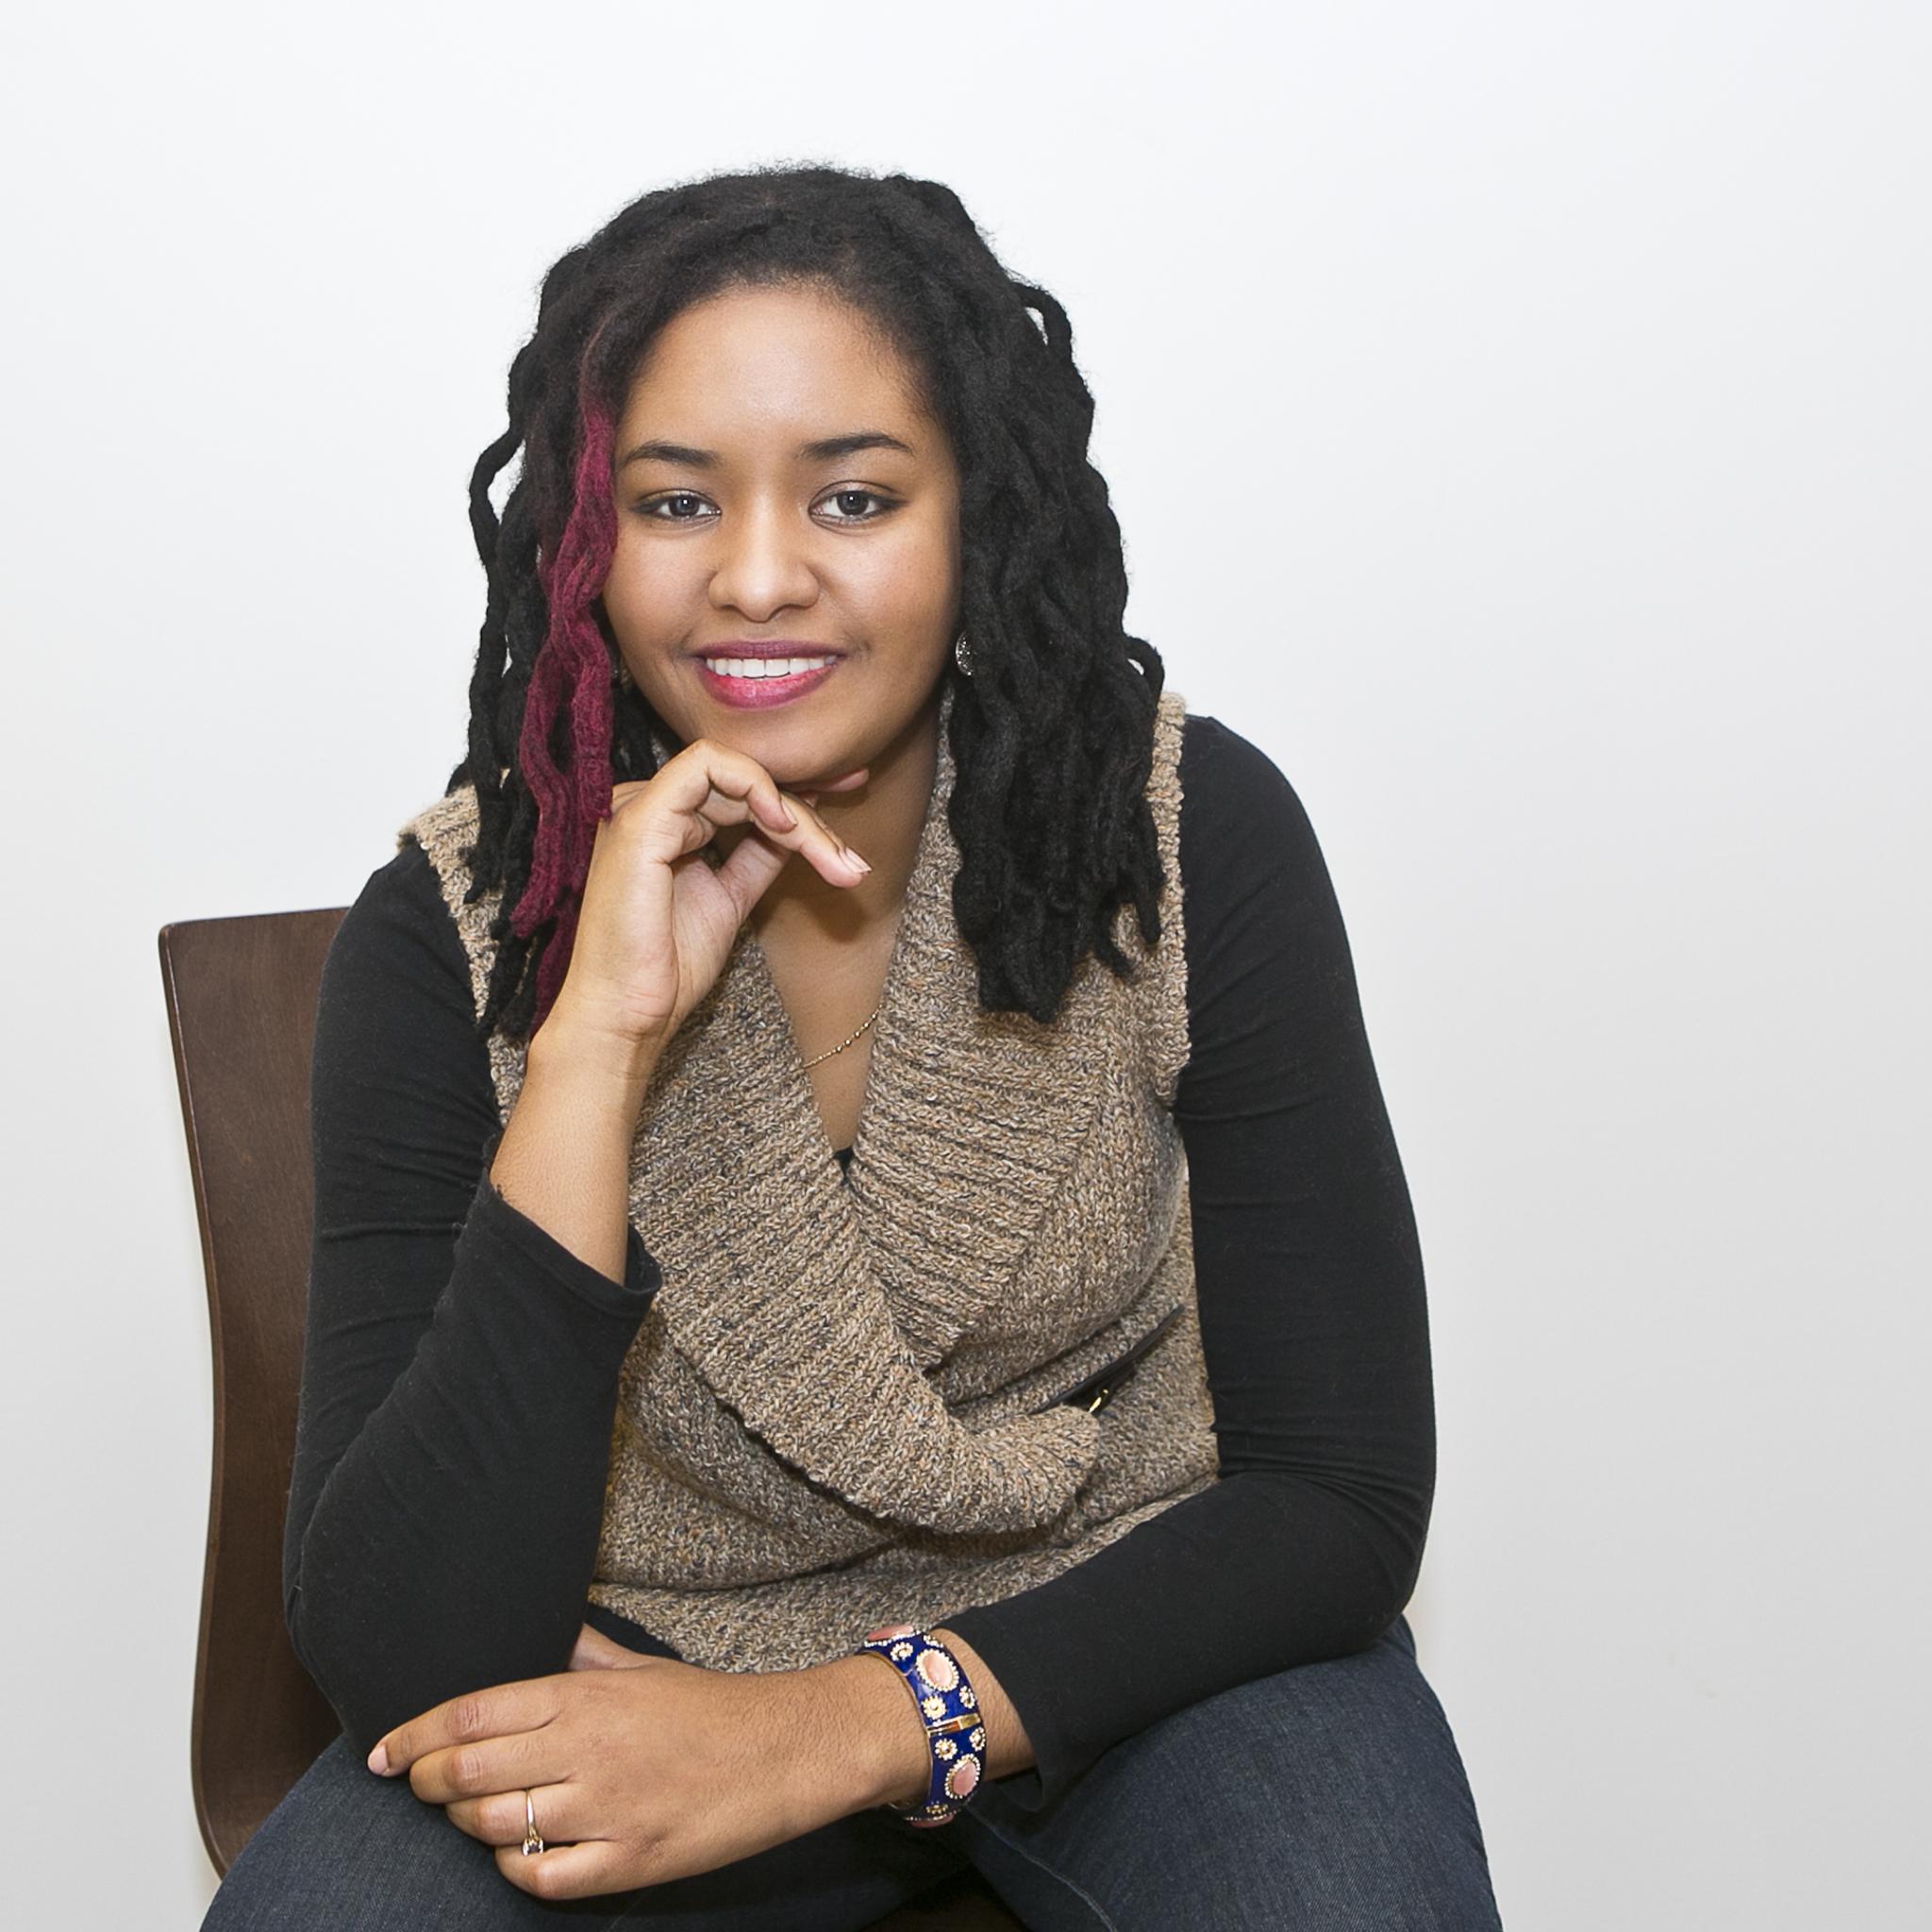 Meet ESSENCE's Black Women in Hollywood Short Film Contest Winner
